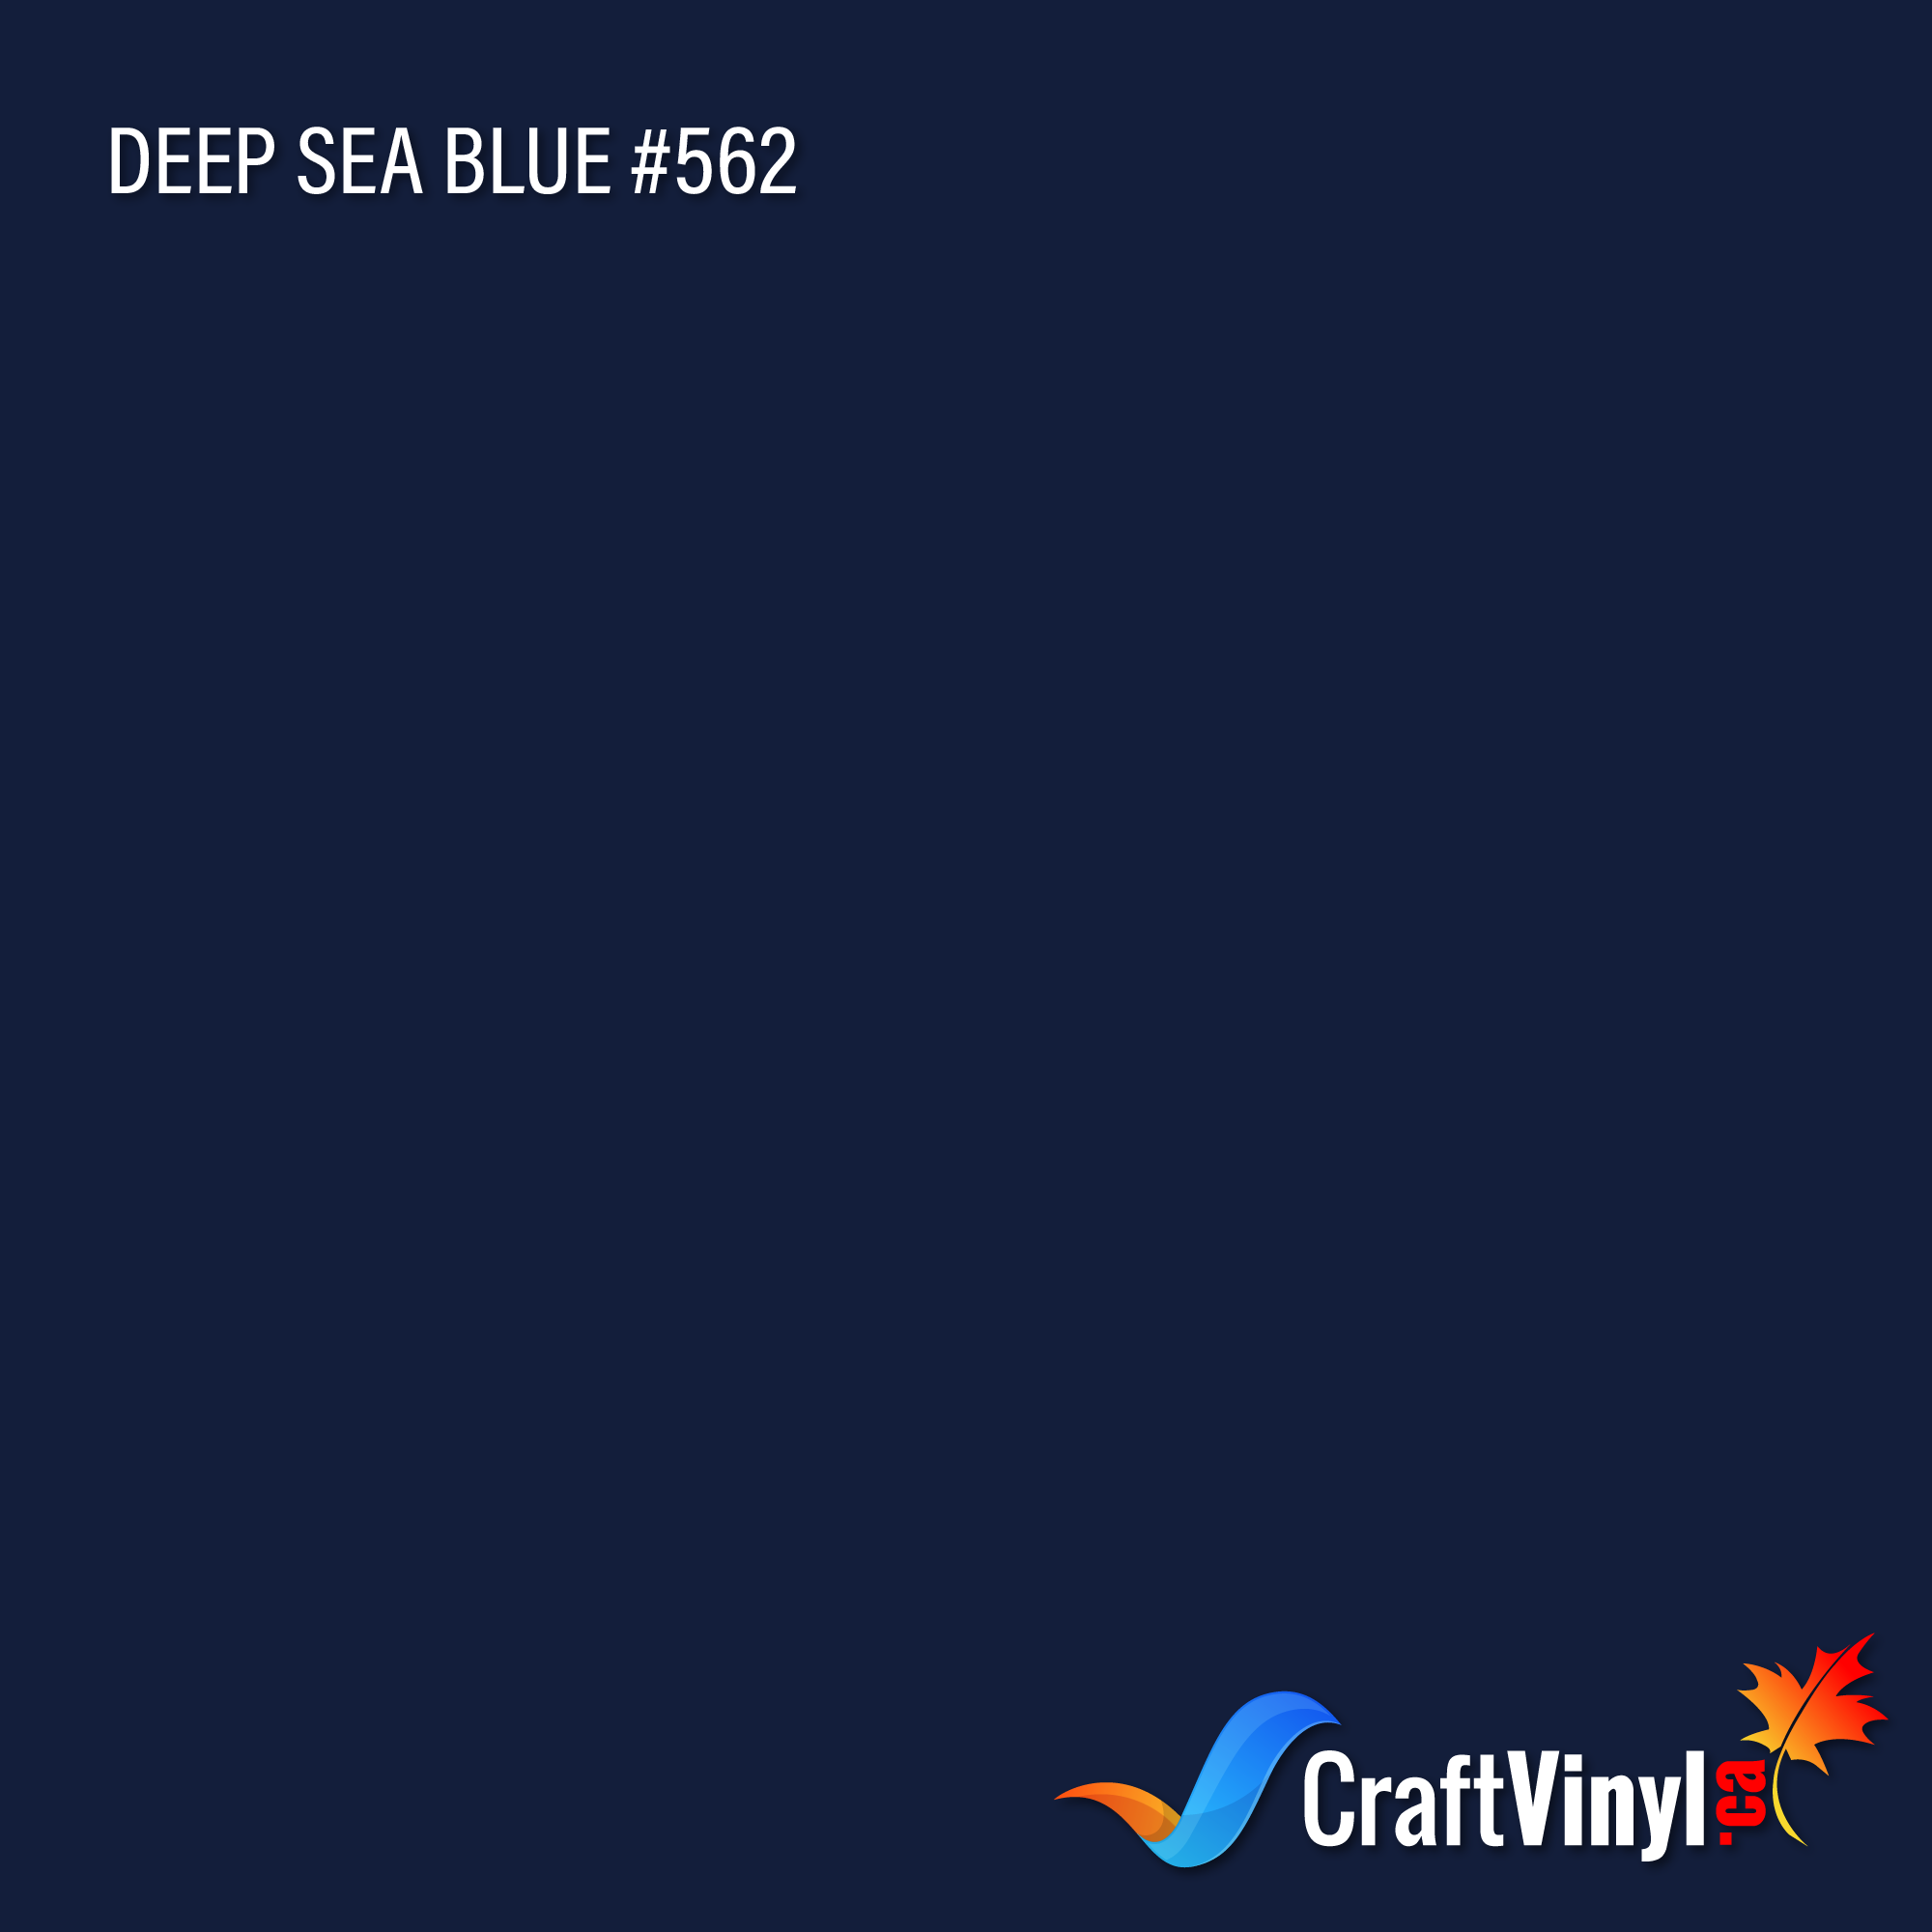 Oracal 651 Dark Blue Vinyl, 562 Deep Sea Blue